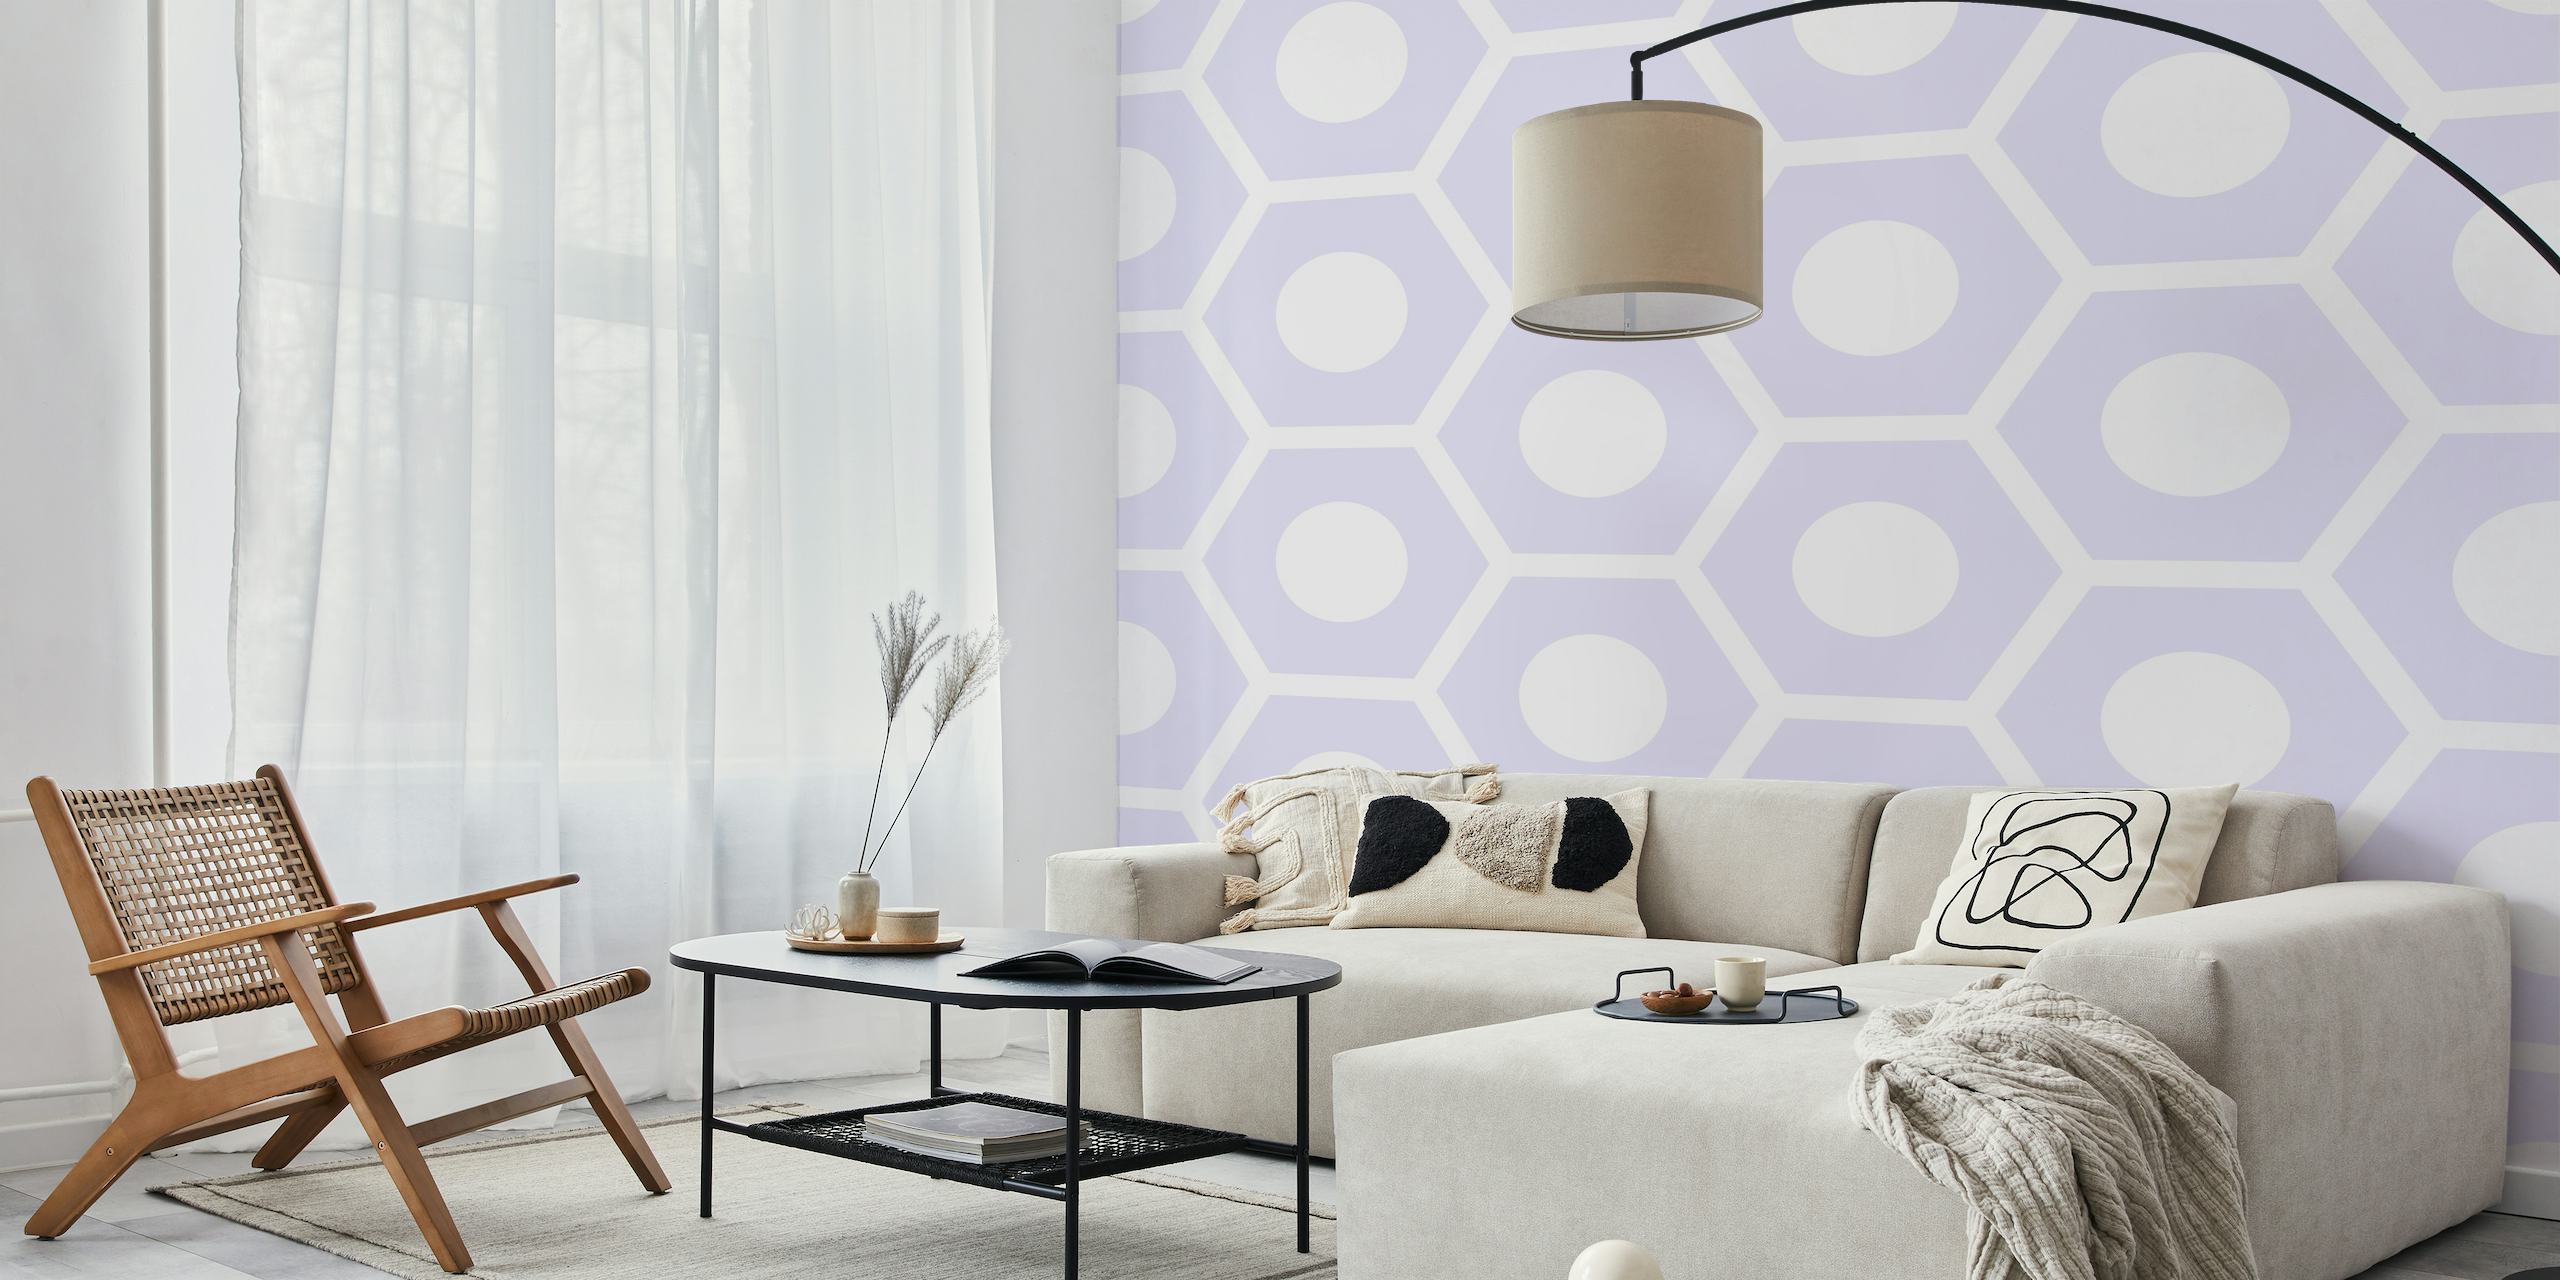 Violet Hexagon Patterned Wallpaper for a modern and elegant interior decor